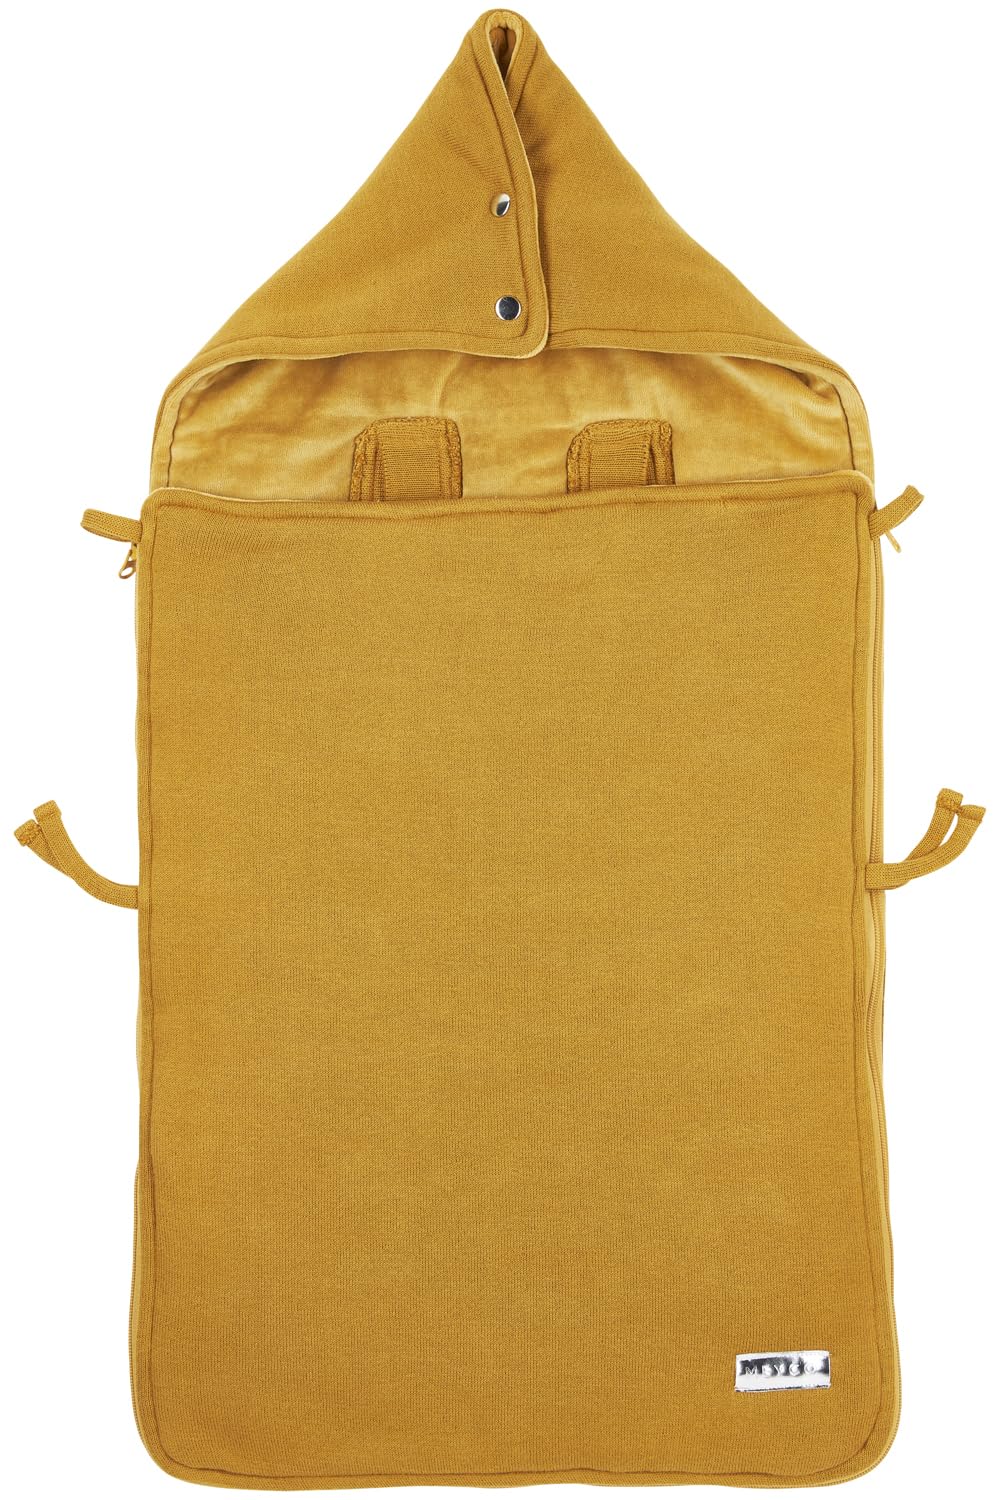 Meyco Baby Fußsack - Knit Basic Honey Gold - 40x82cm - Einzelpackung